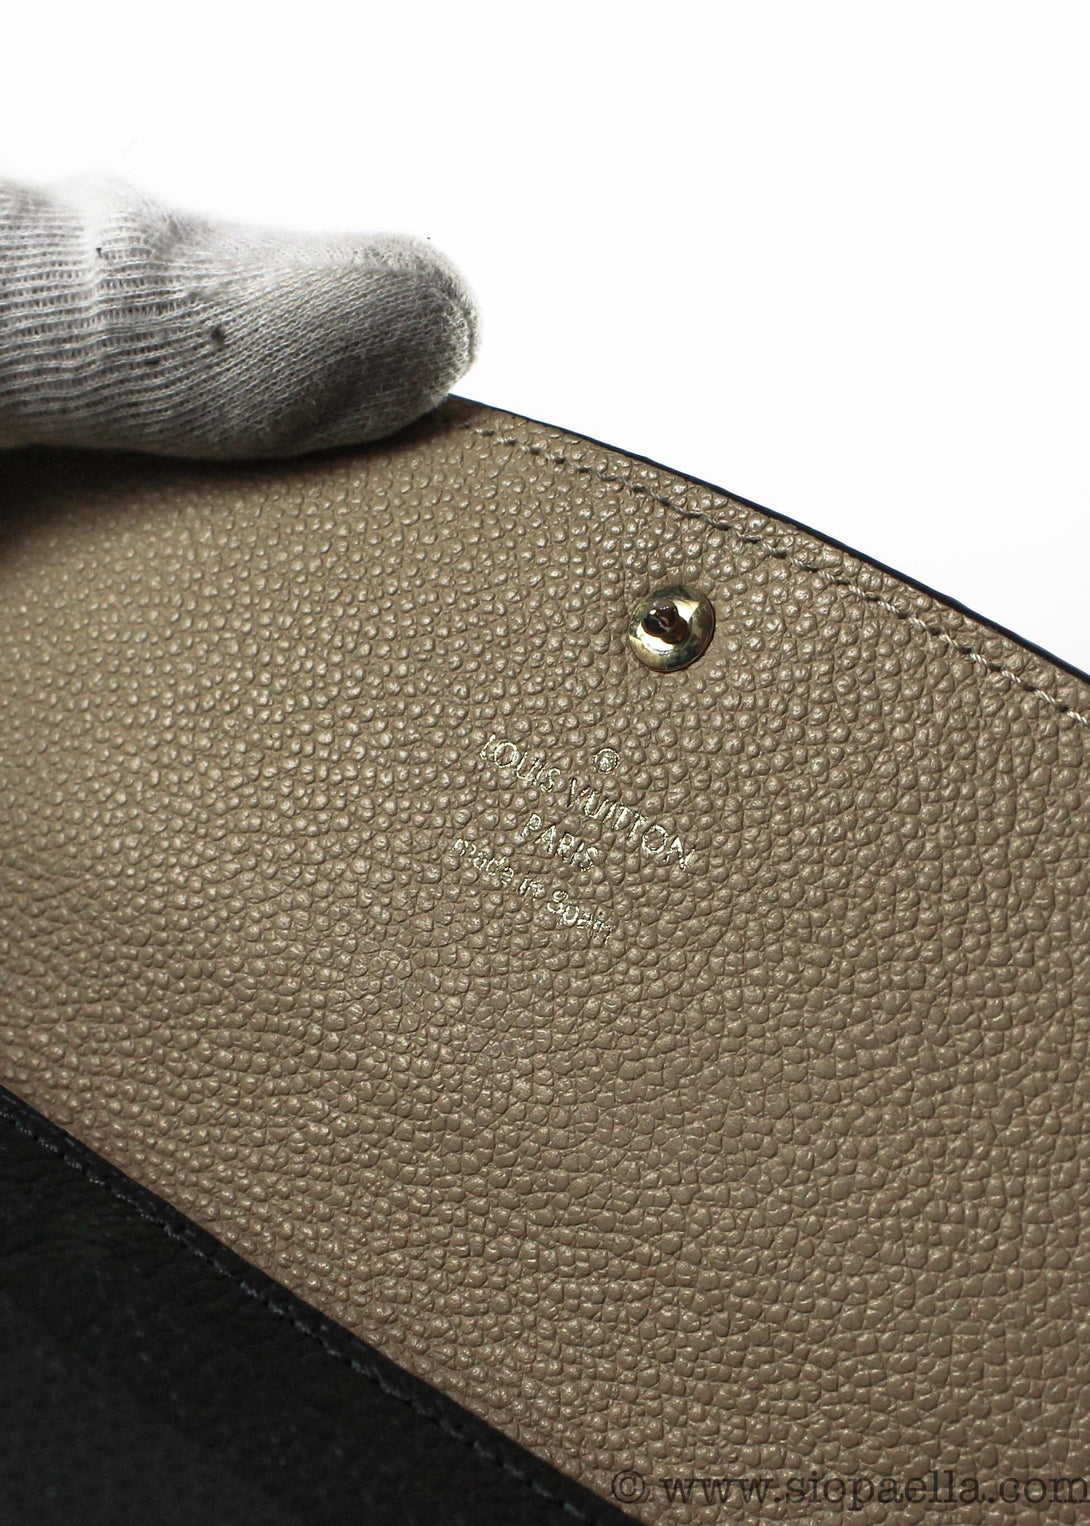 Louis Vuitton Black Leather Monogram "Emilie" Wallet - As seen on Instagram - Siopaella Designer Exchange